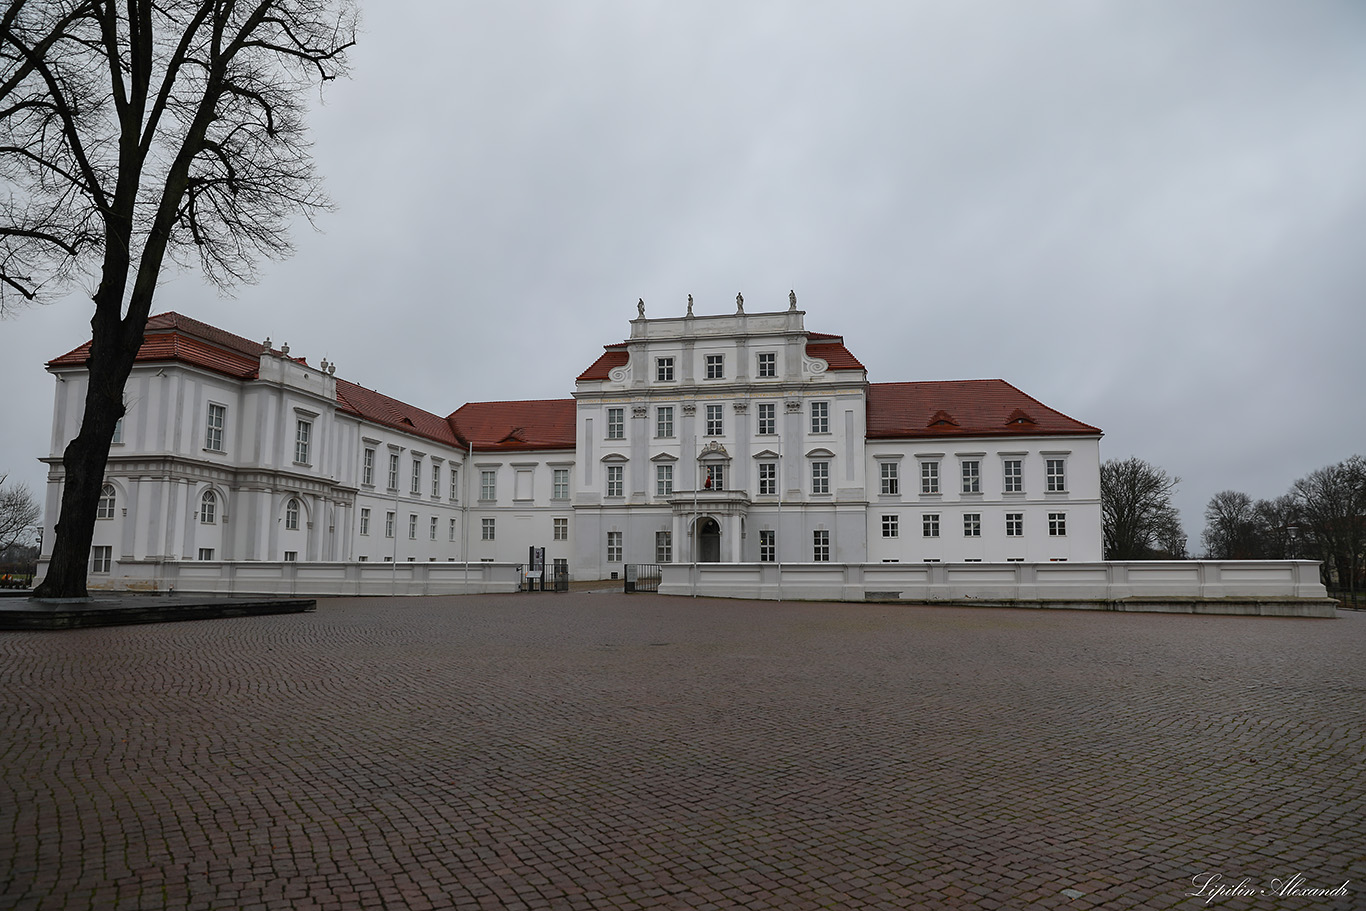 Дворец Ораниенбург - Ораниенбург (Oranienburg)